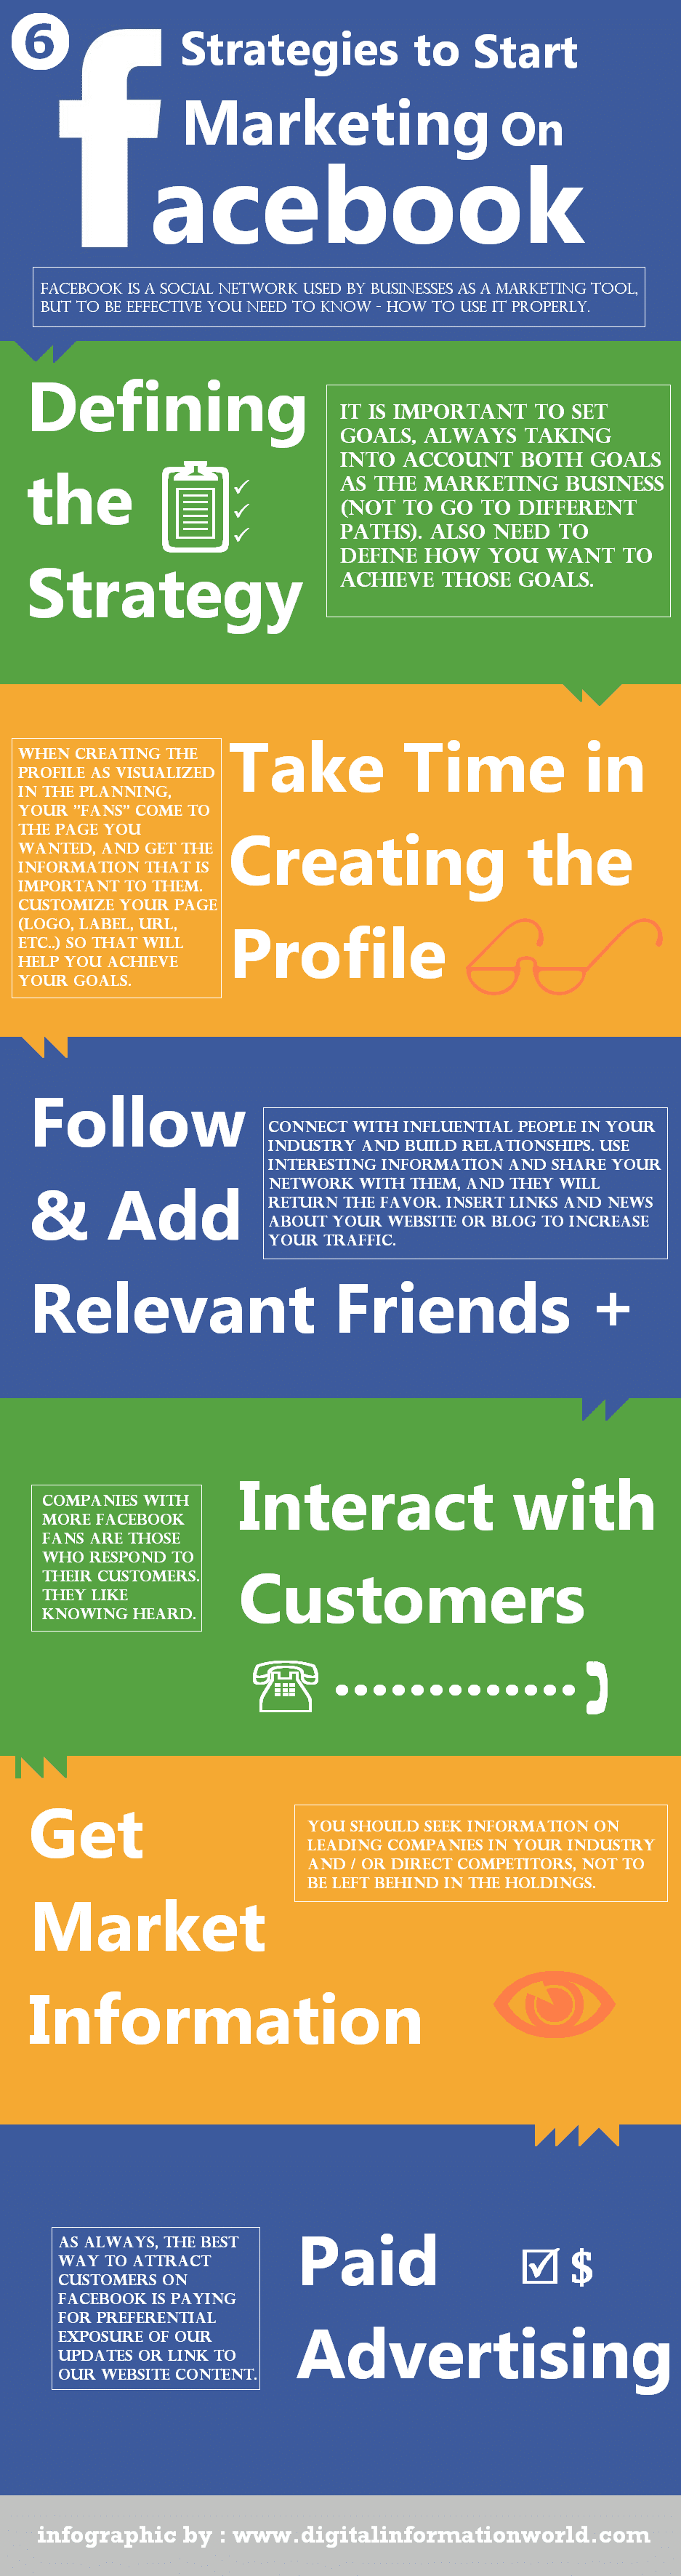 startup-facebook-marketing-strategies-infographic